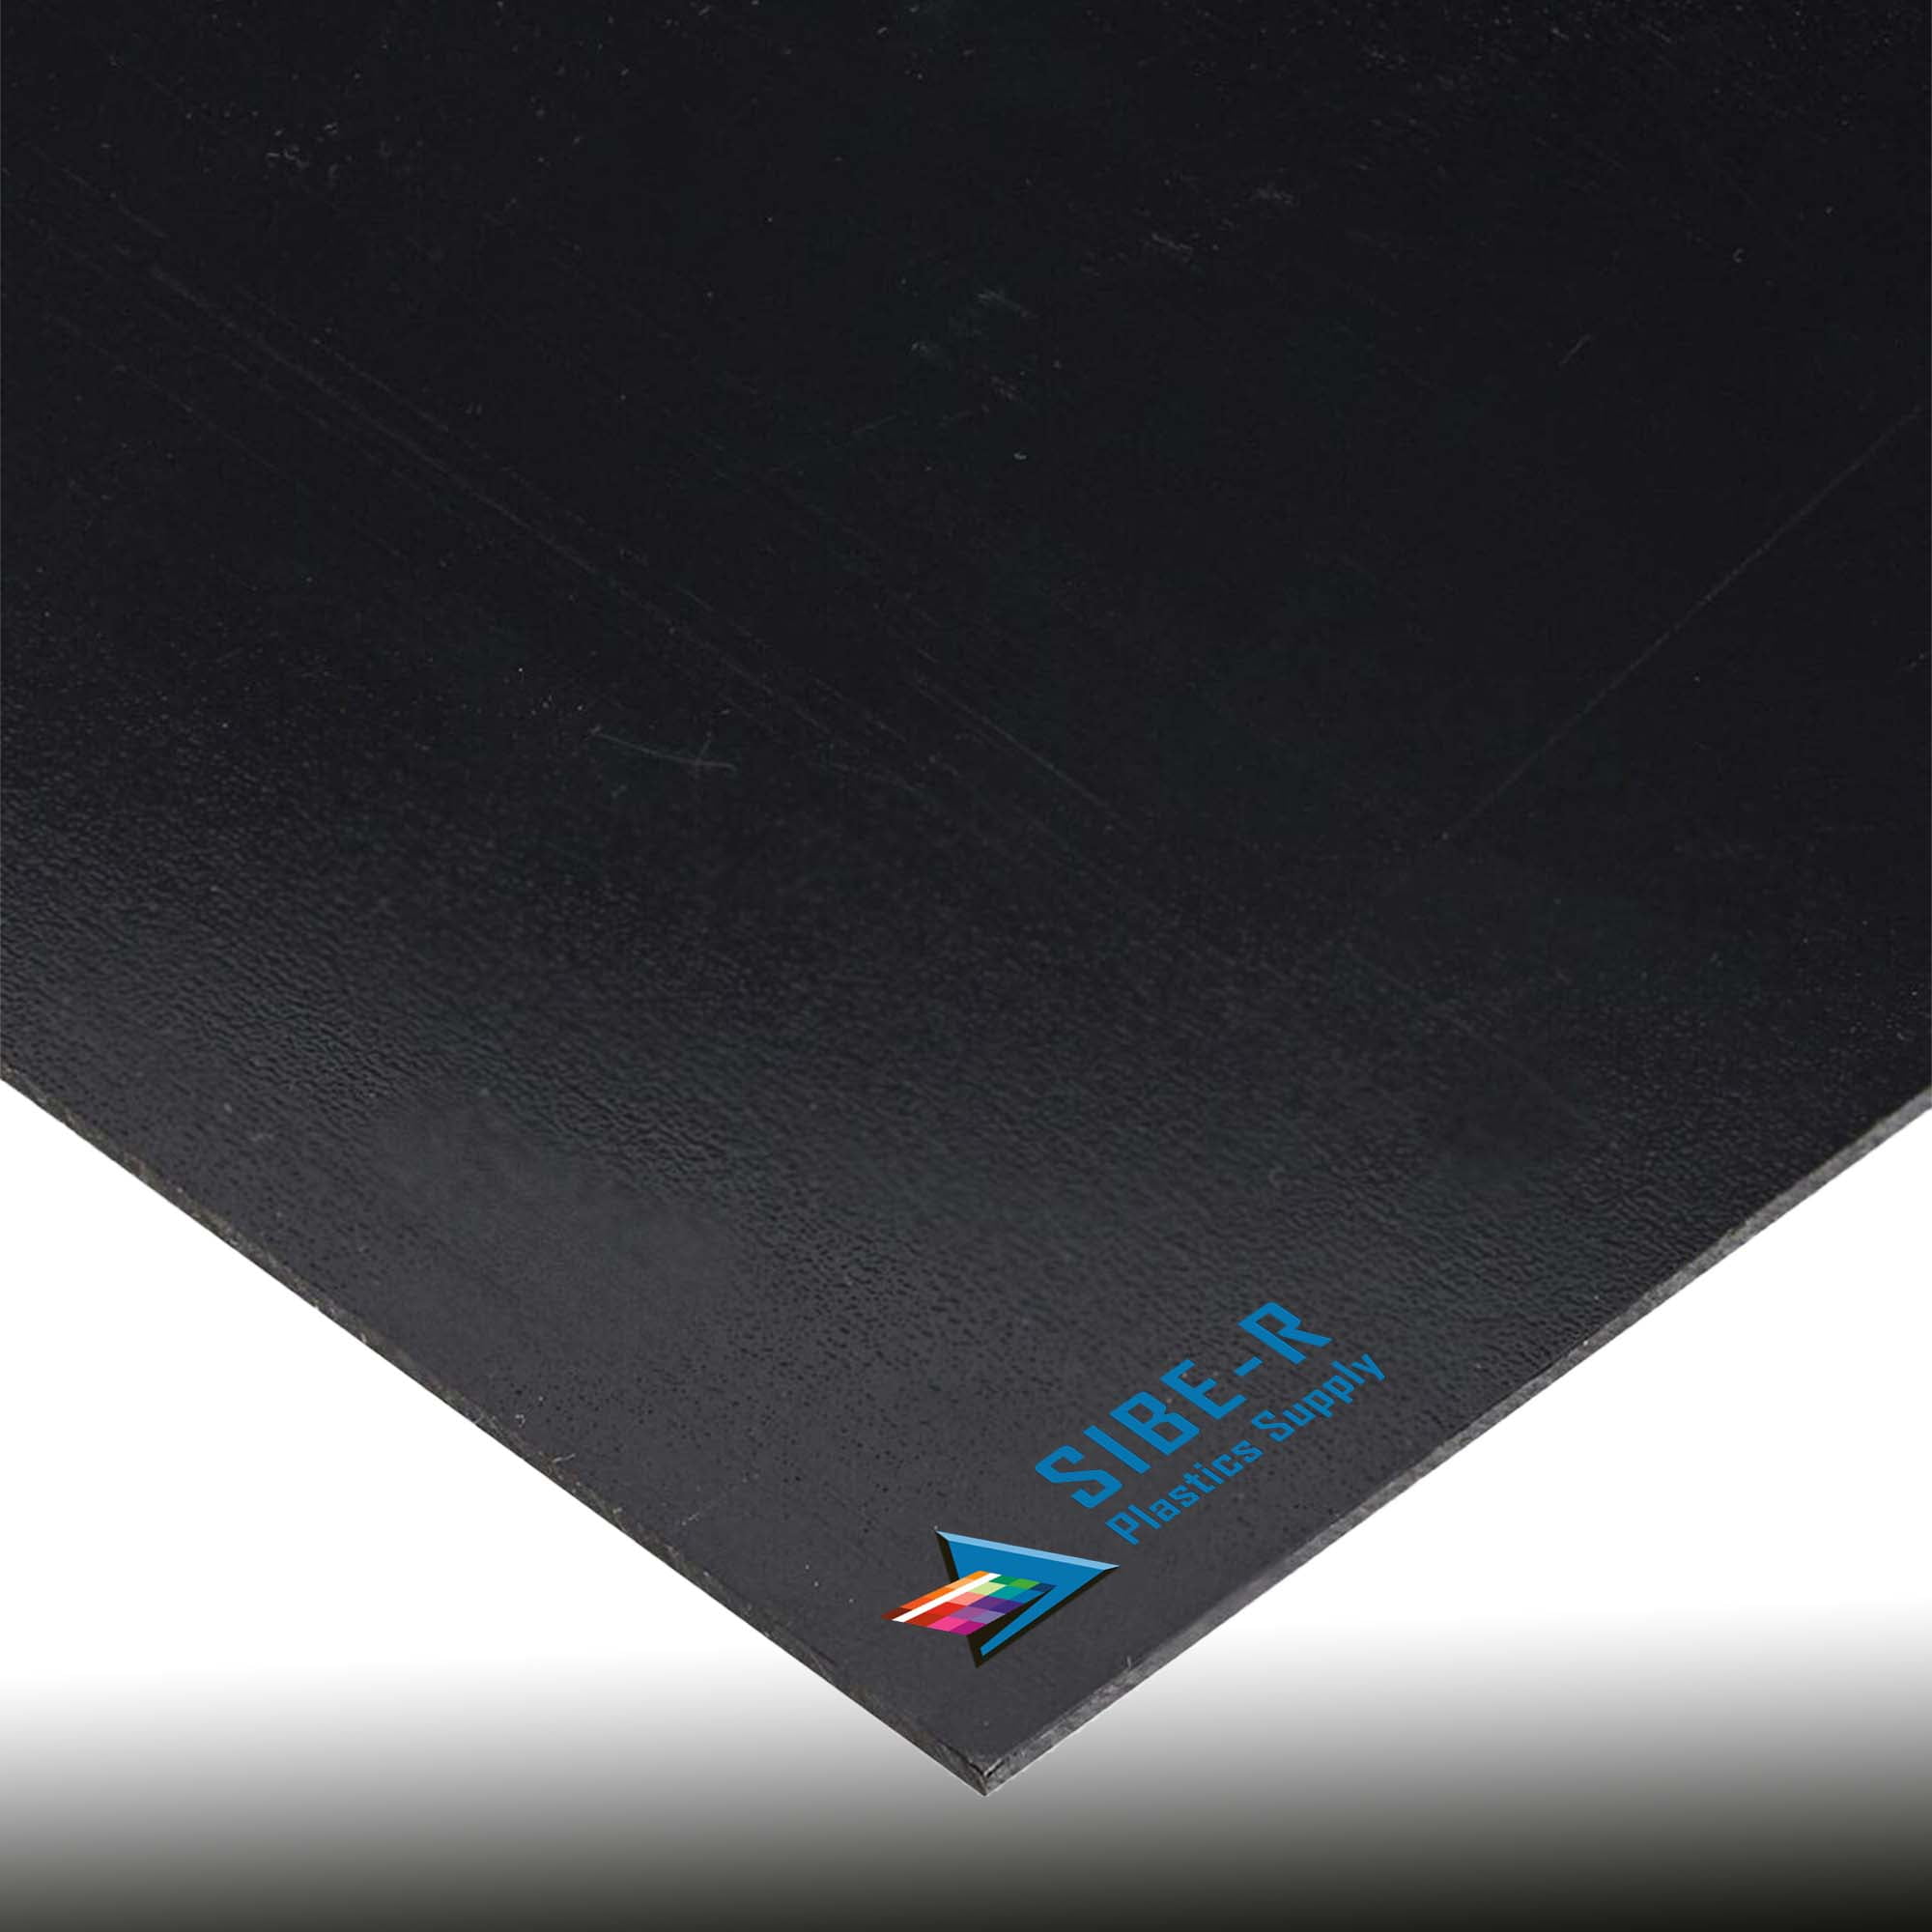 Kydex Sheet 0.063 x 24 x 24, Black, P-3 Velour Matte